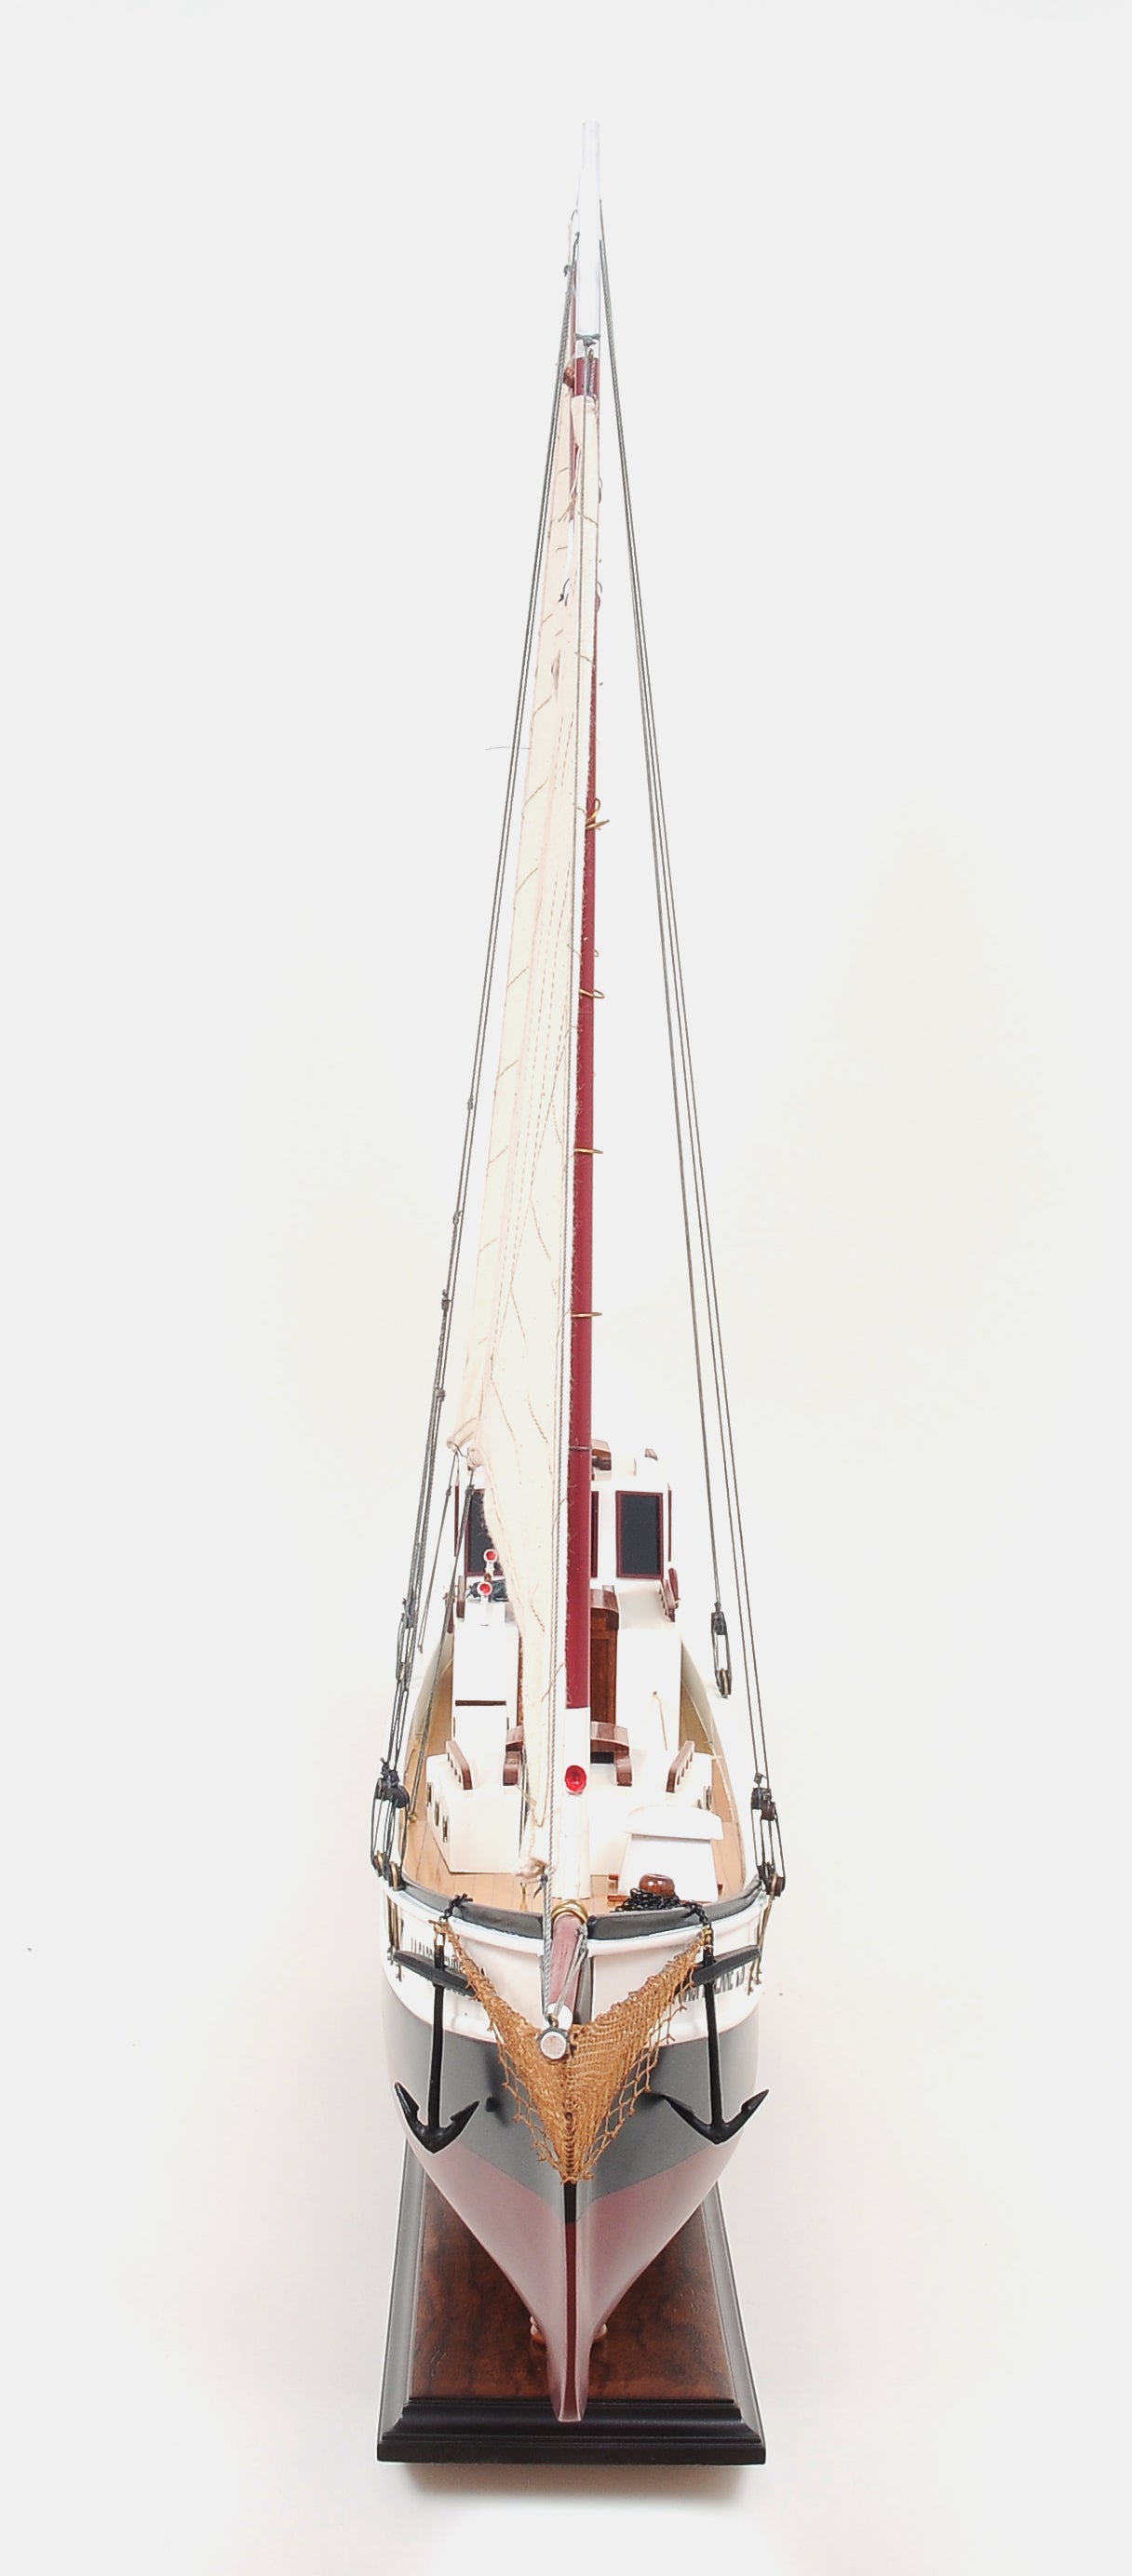 ALDO Hobbies & Creative Arts> Collectibles> Scale Model L: 43 W: 5.5 H: 31.25 Inches / NEW / Wood La Gaspésienne Canadien Sailboat Large Wood Model Ship By Developer Howard Chapelle